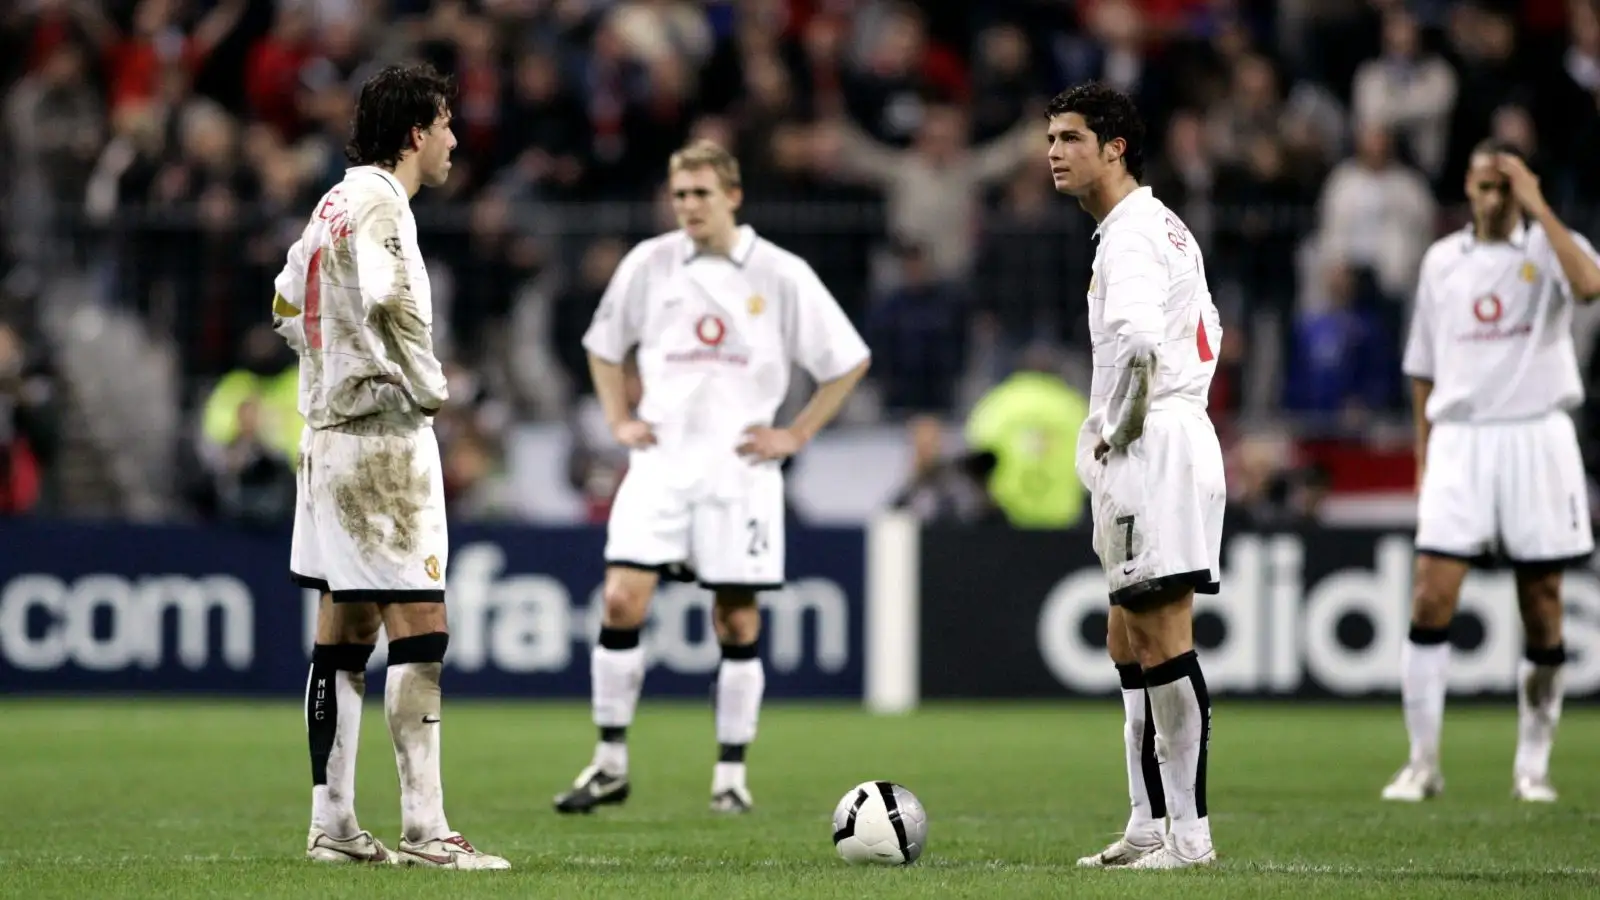 Man Utd duo Cristiano Ronaldo and Ruud van Nistelrooy look dejected